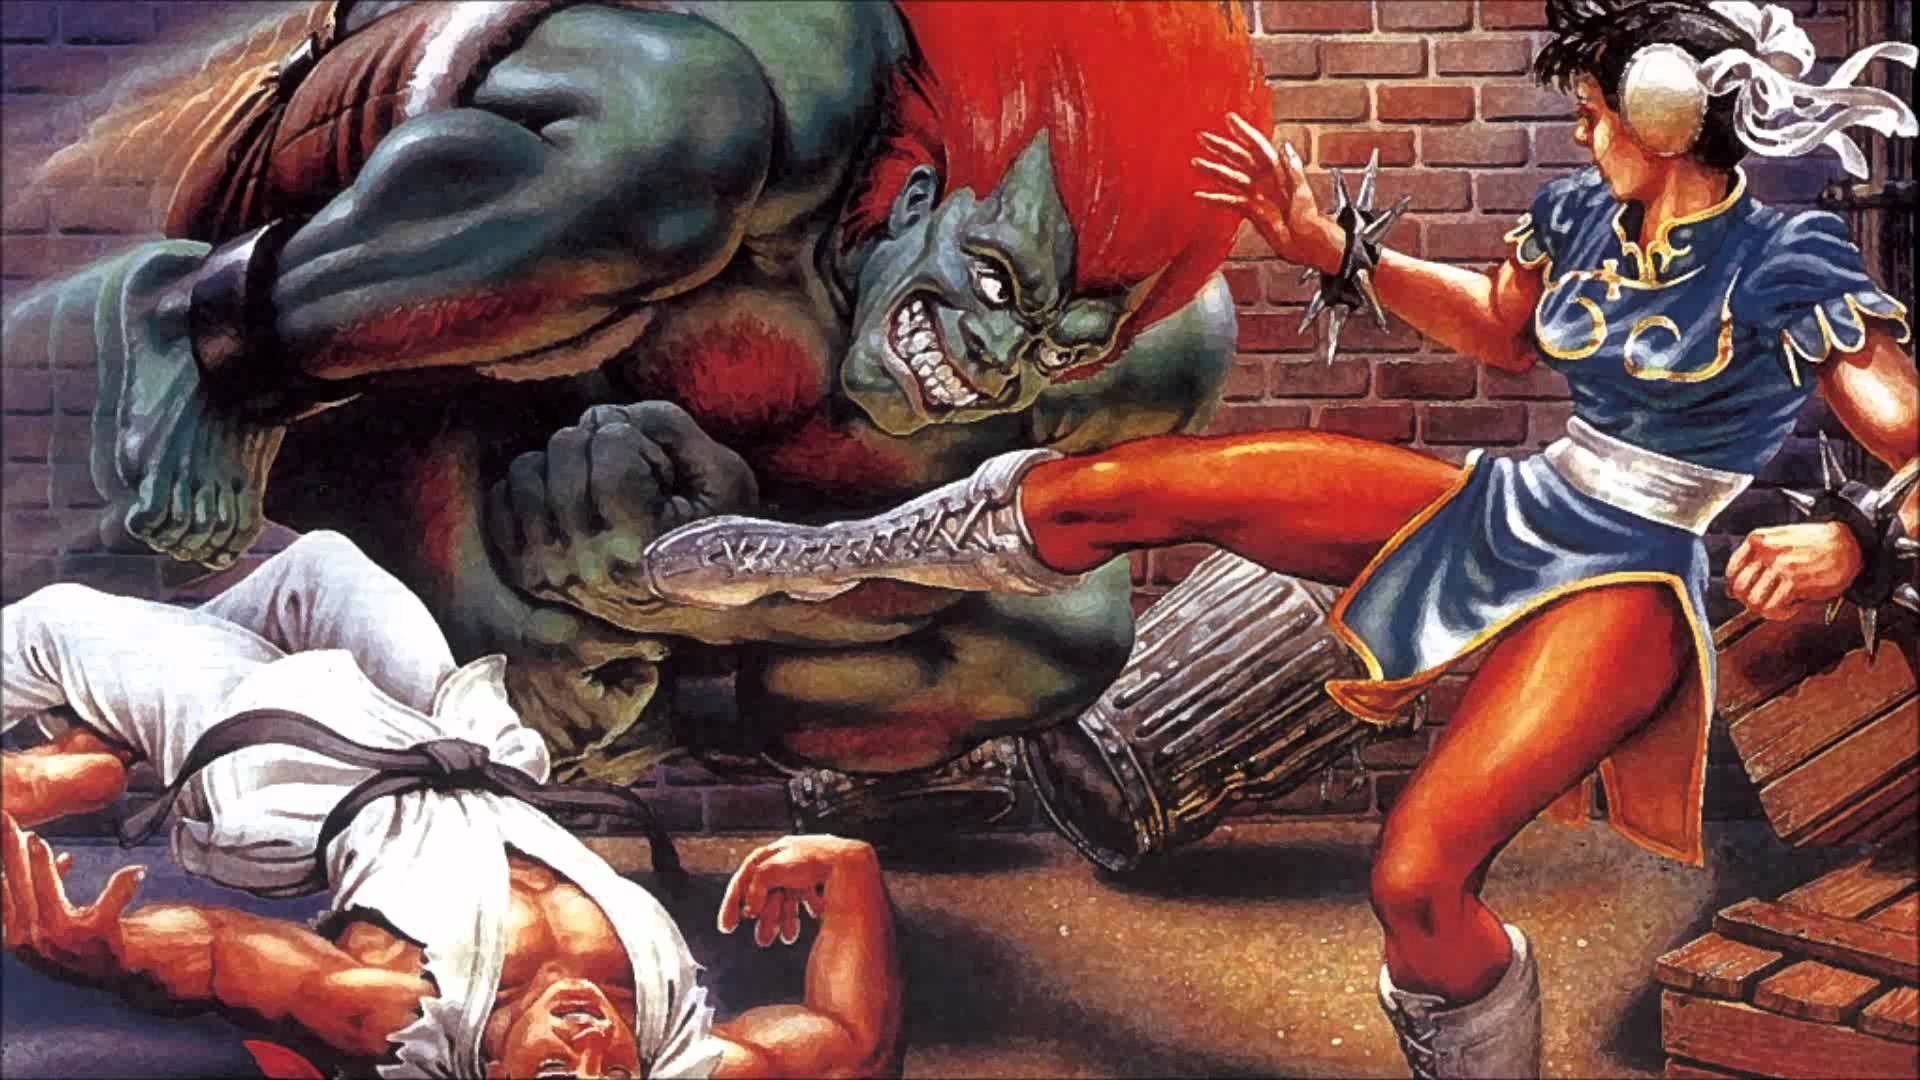 Street Fighter II SNES box art